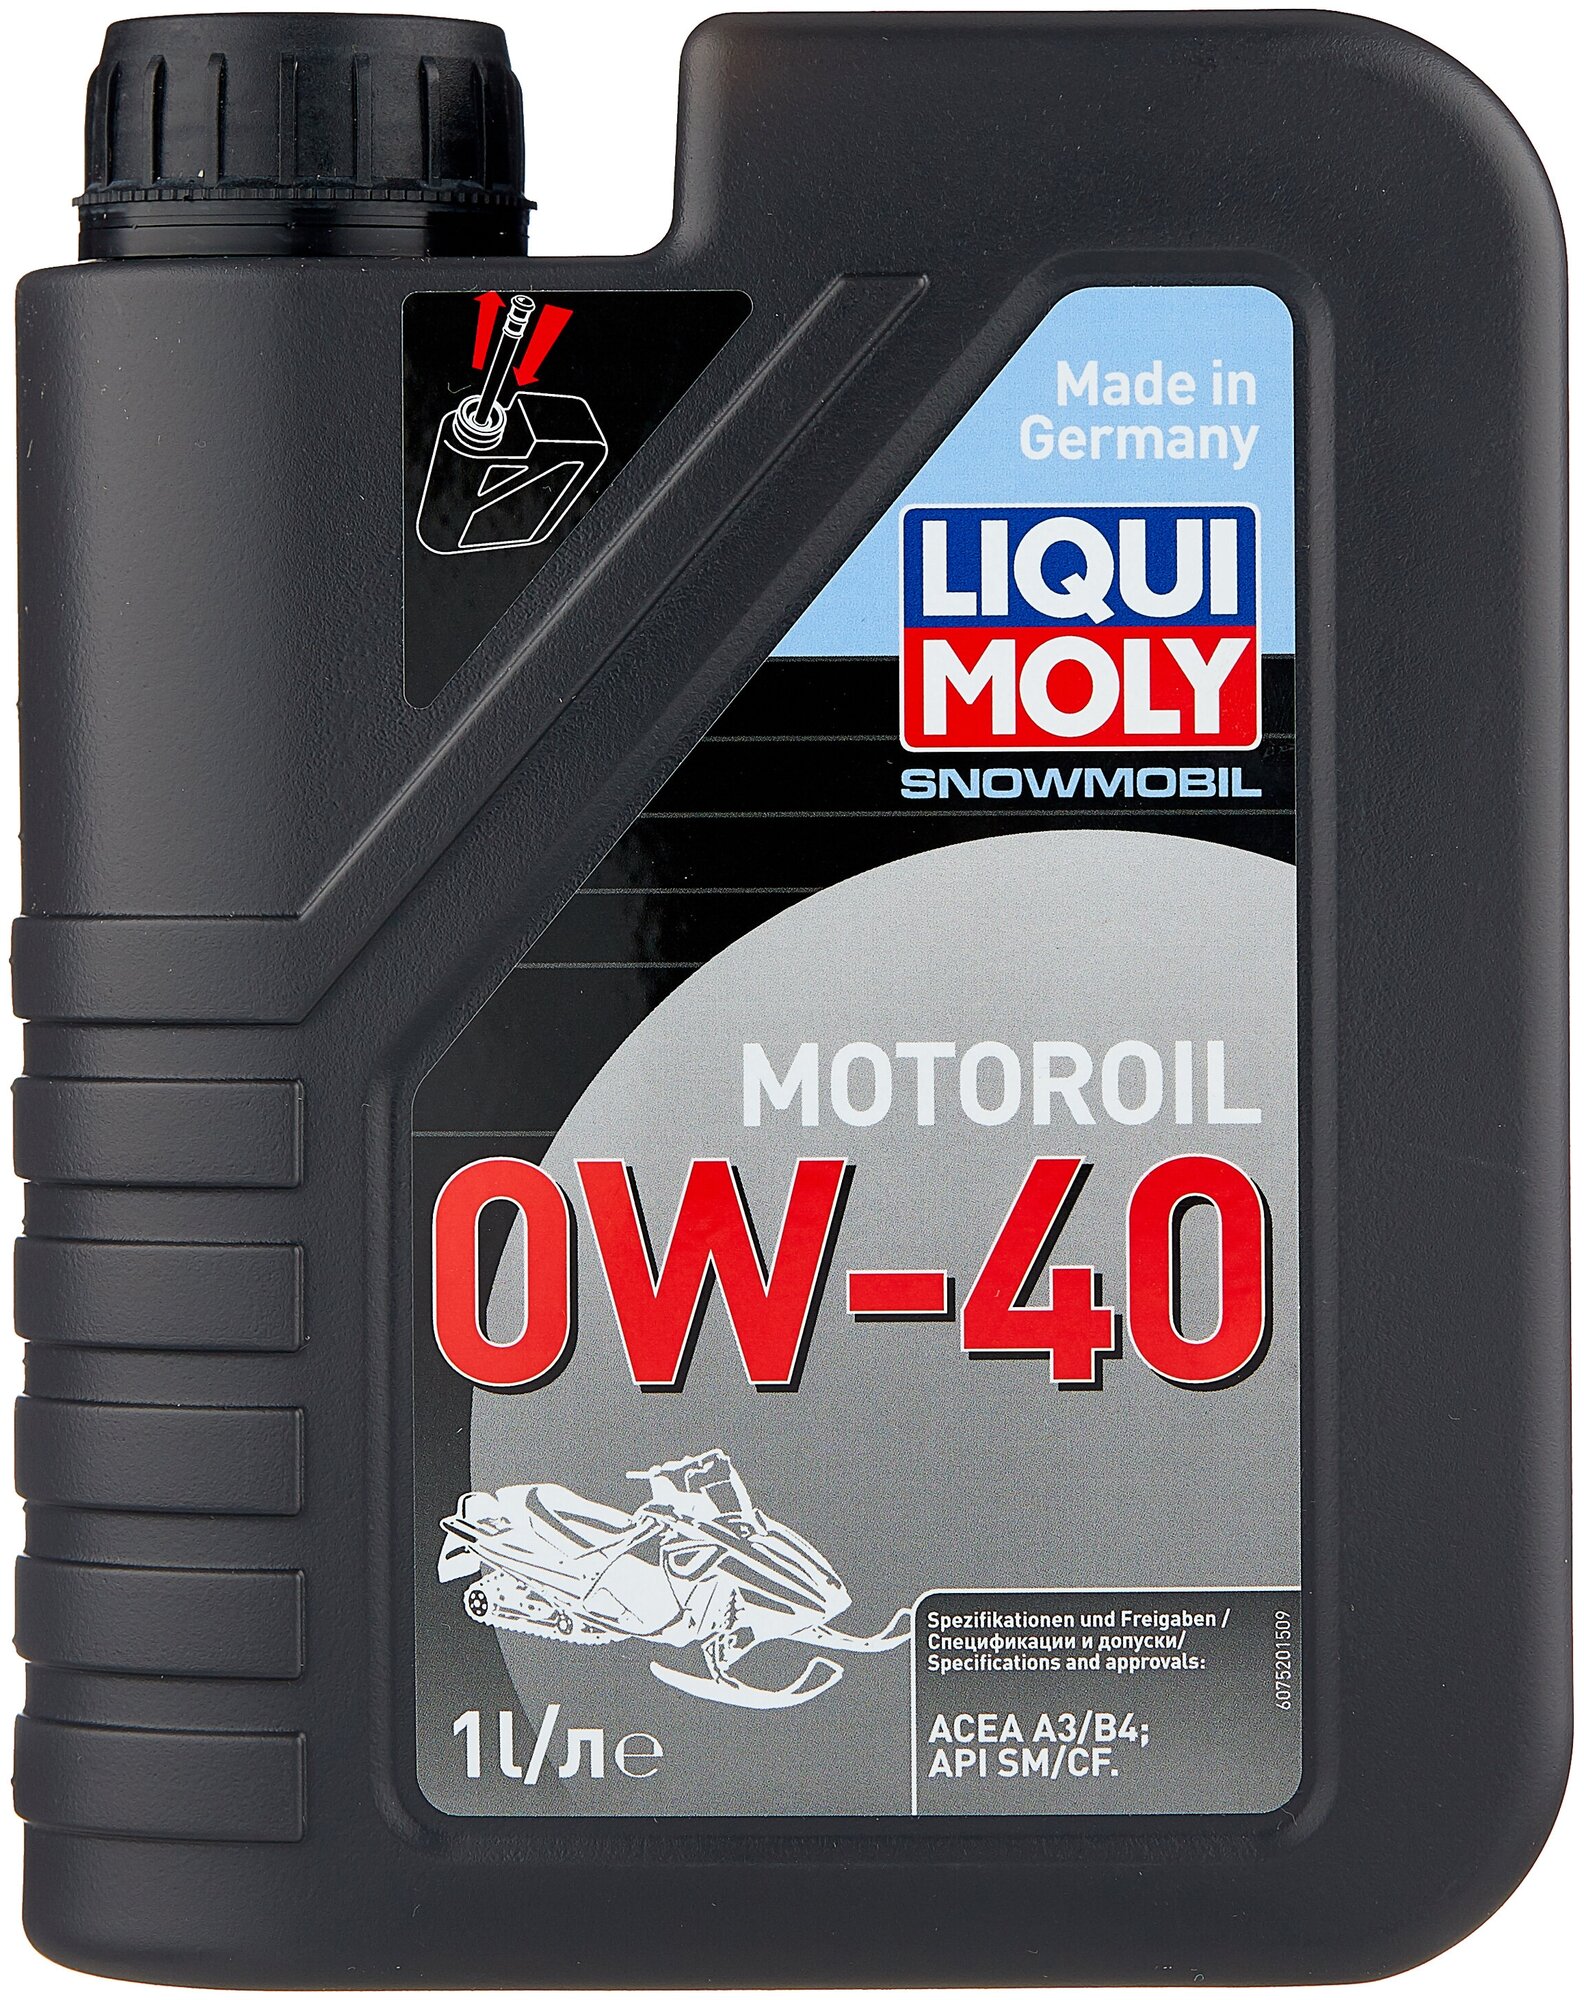 Моторное масло Liqui Moly для снегоходов Snowmobil Motoroil 0W-40 1 л